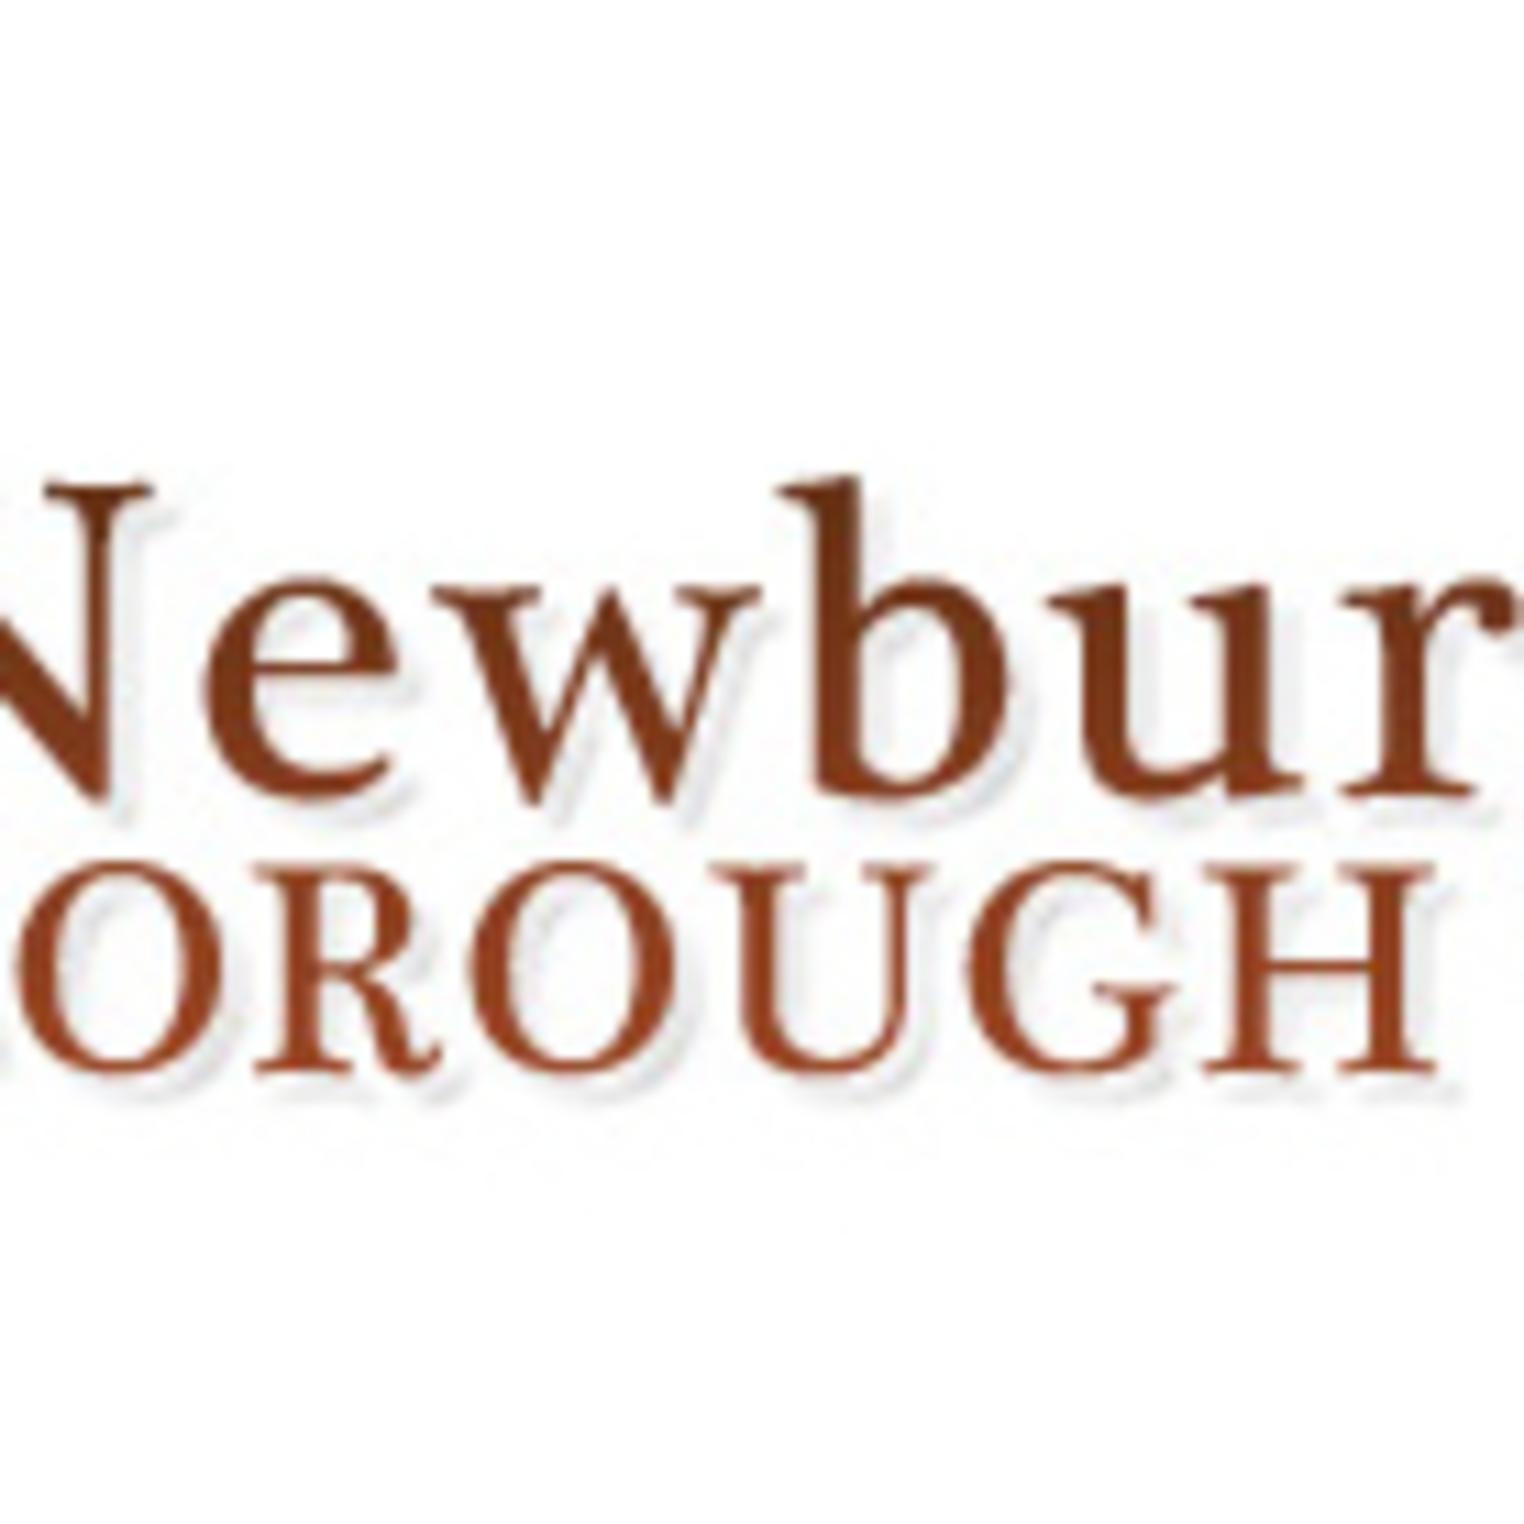 Newburg Borough